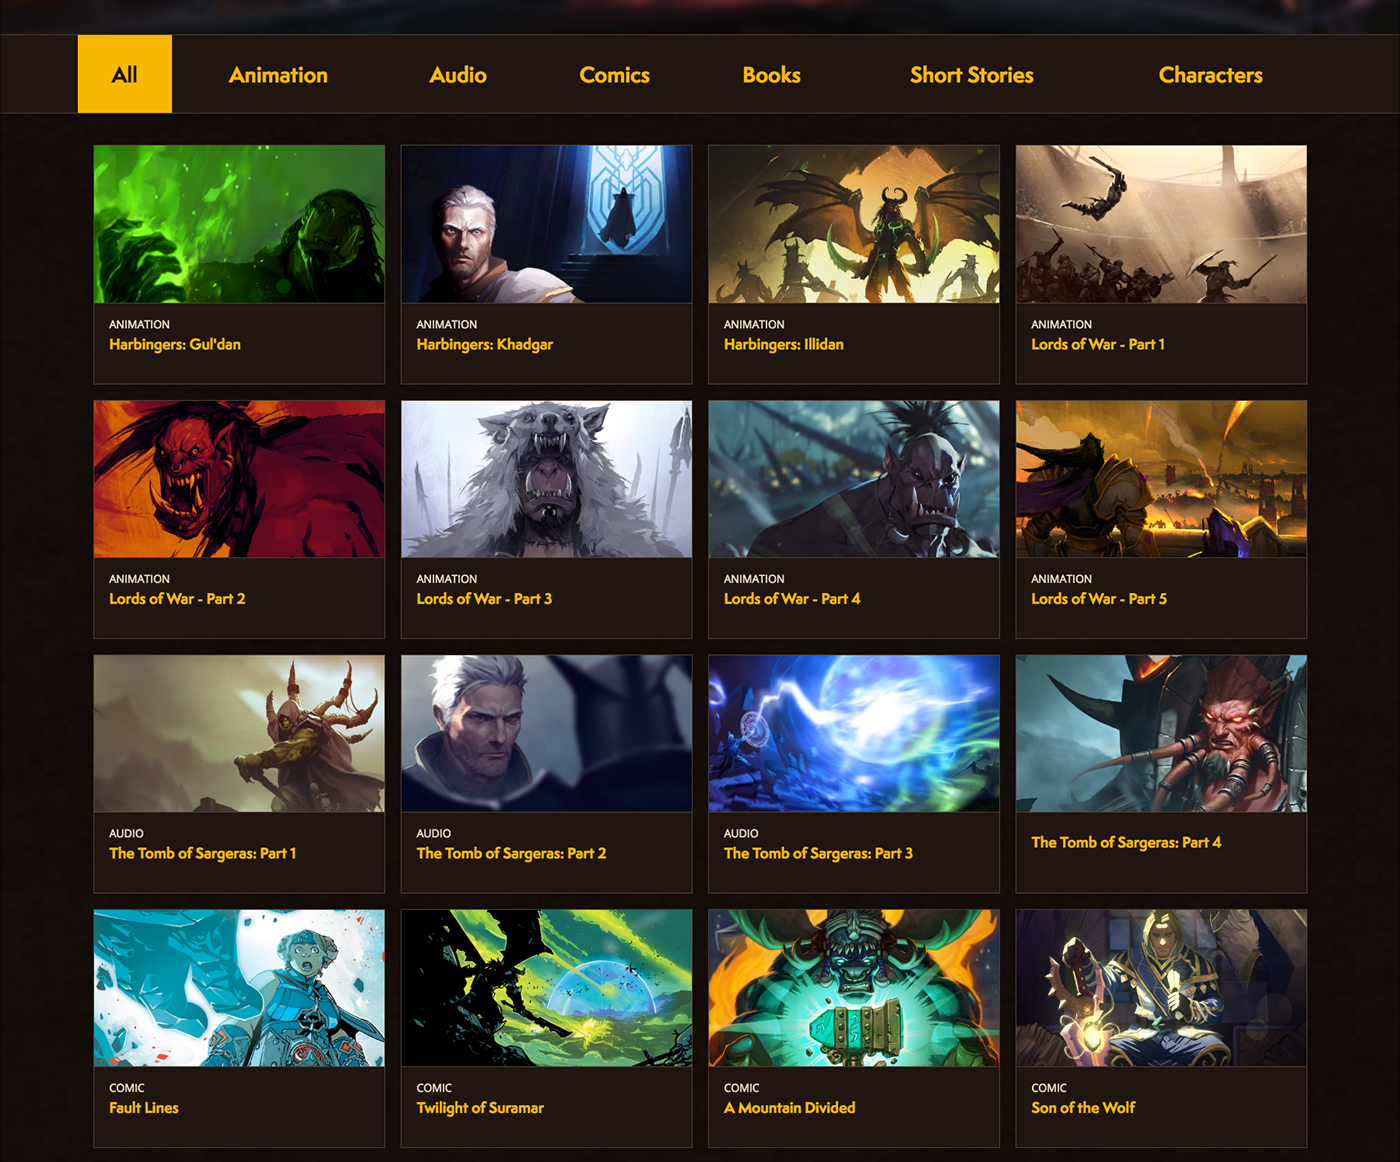 Web Design  Website Web online game Blizzard warcraft